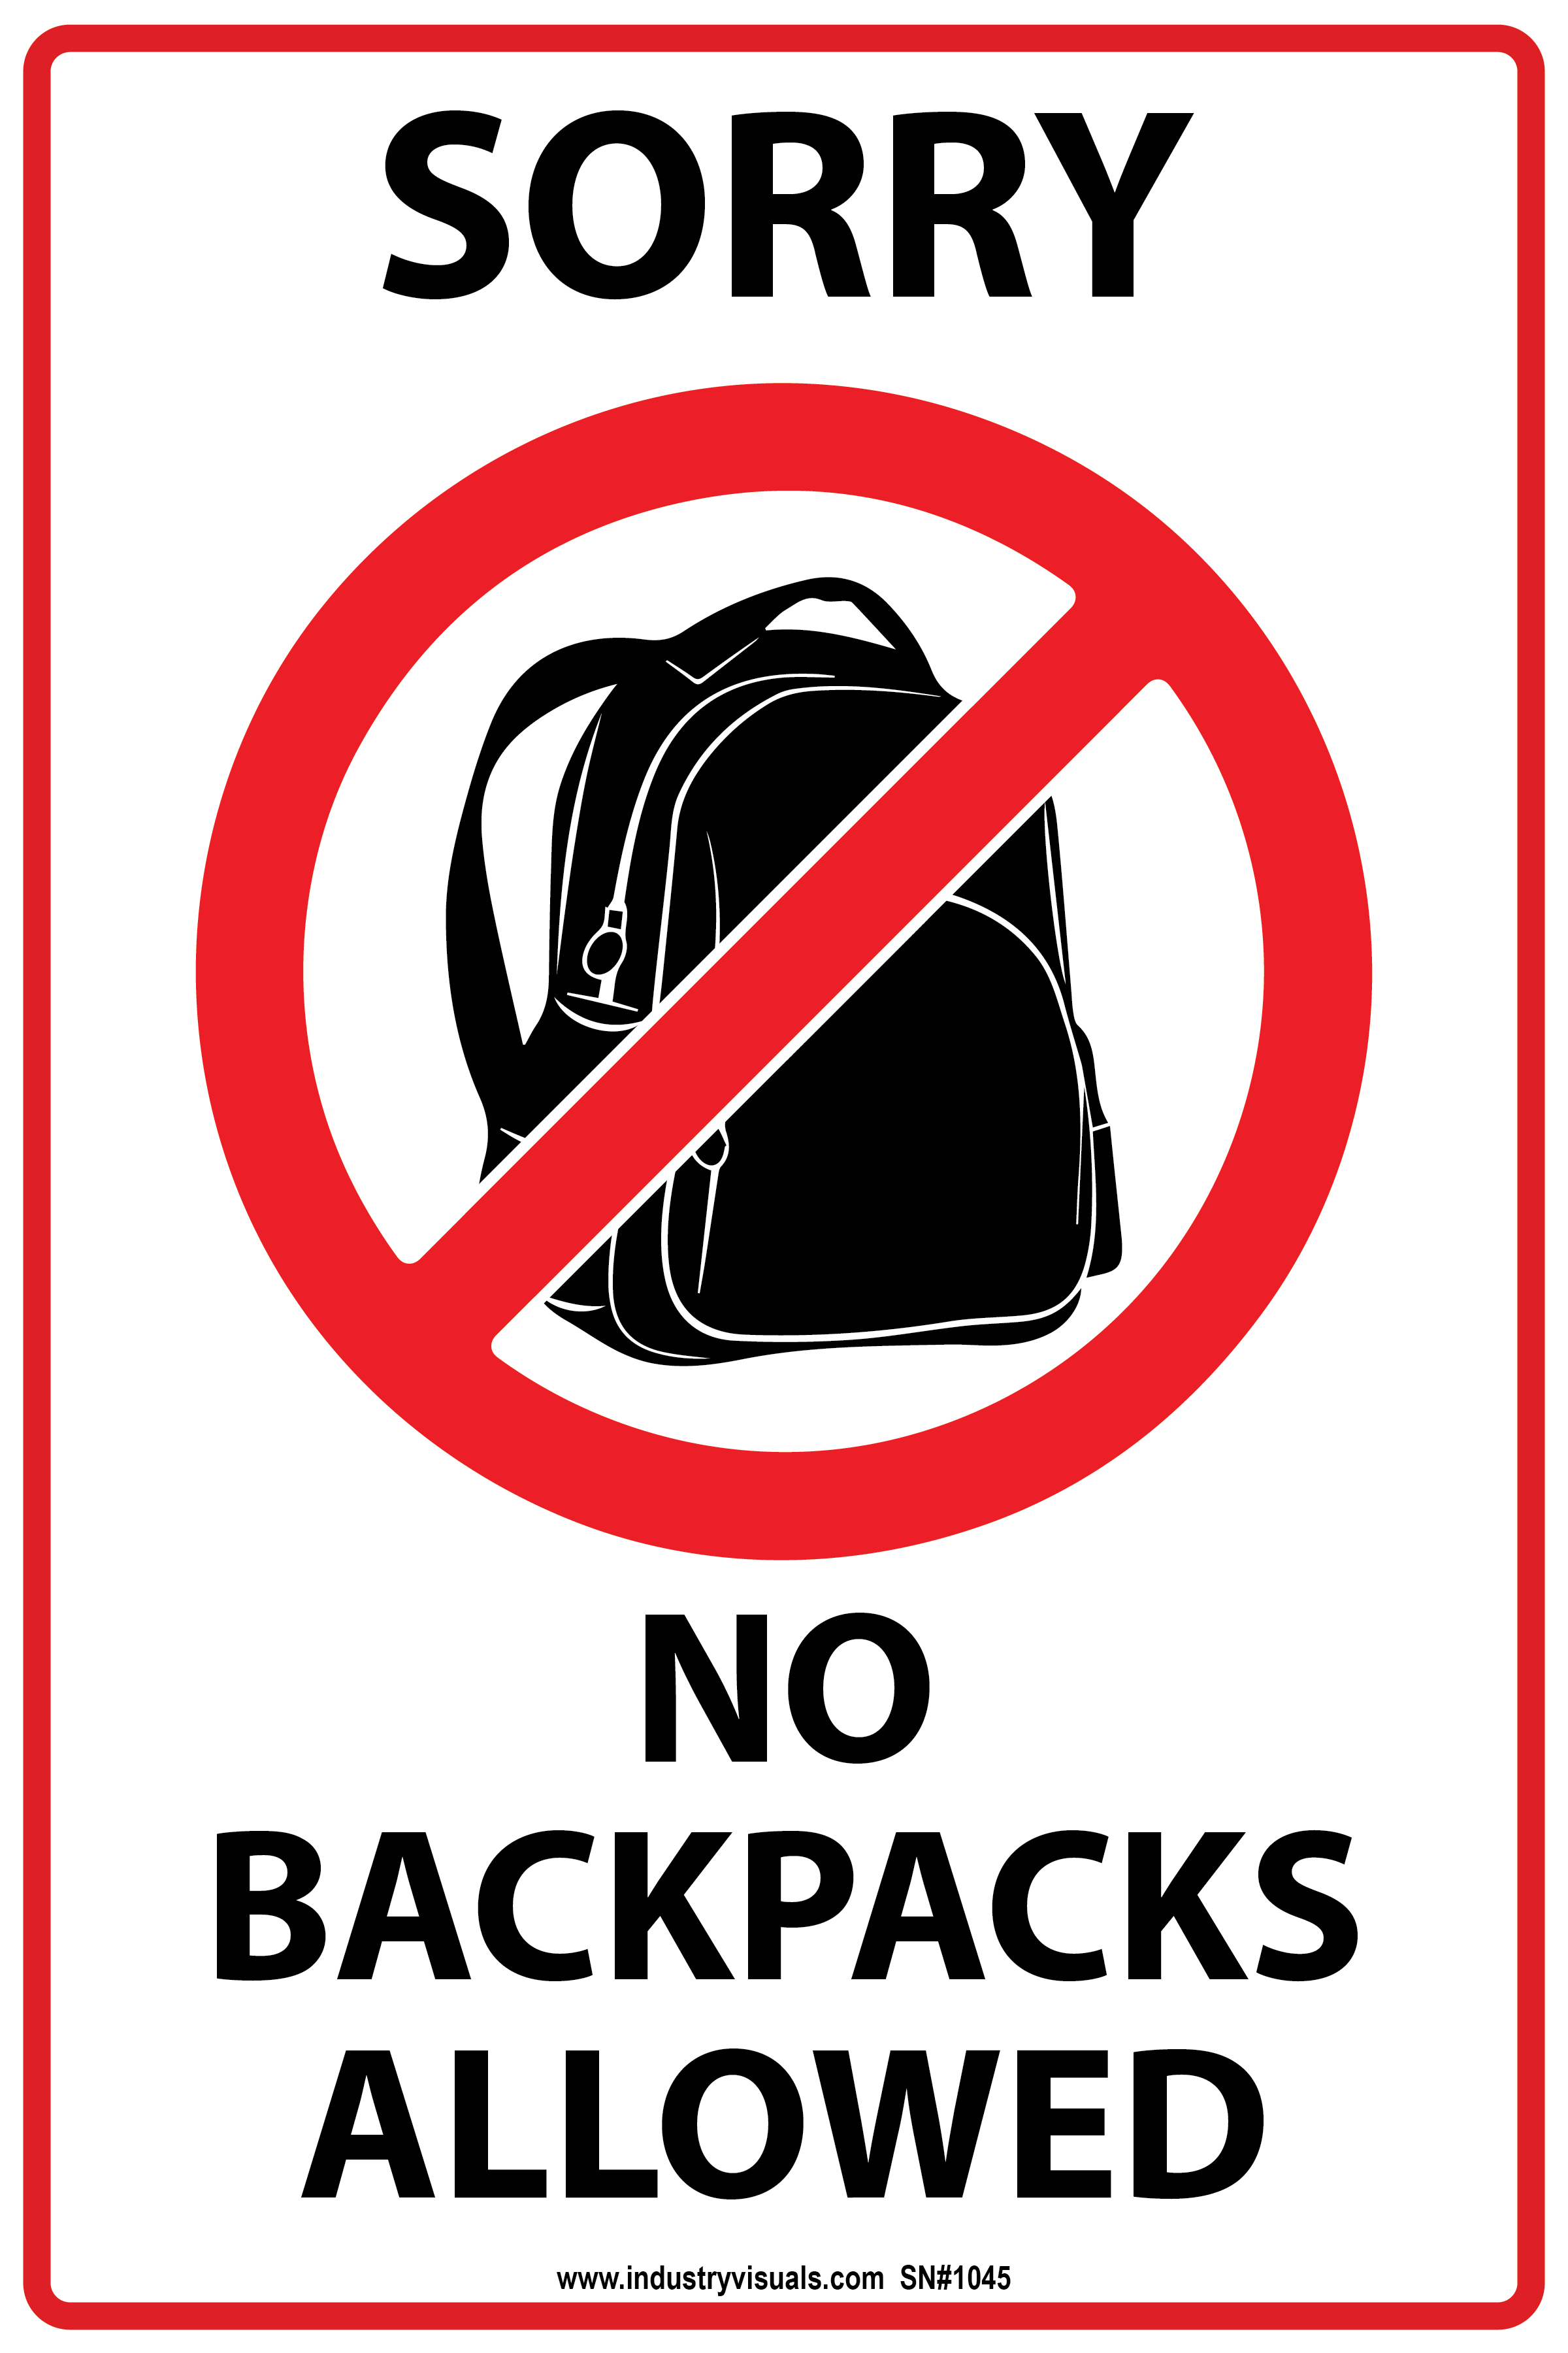 Why No Backpacks Allowed? - PostureInfoHub